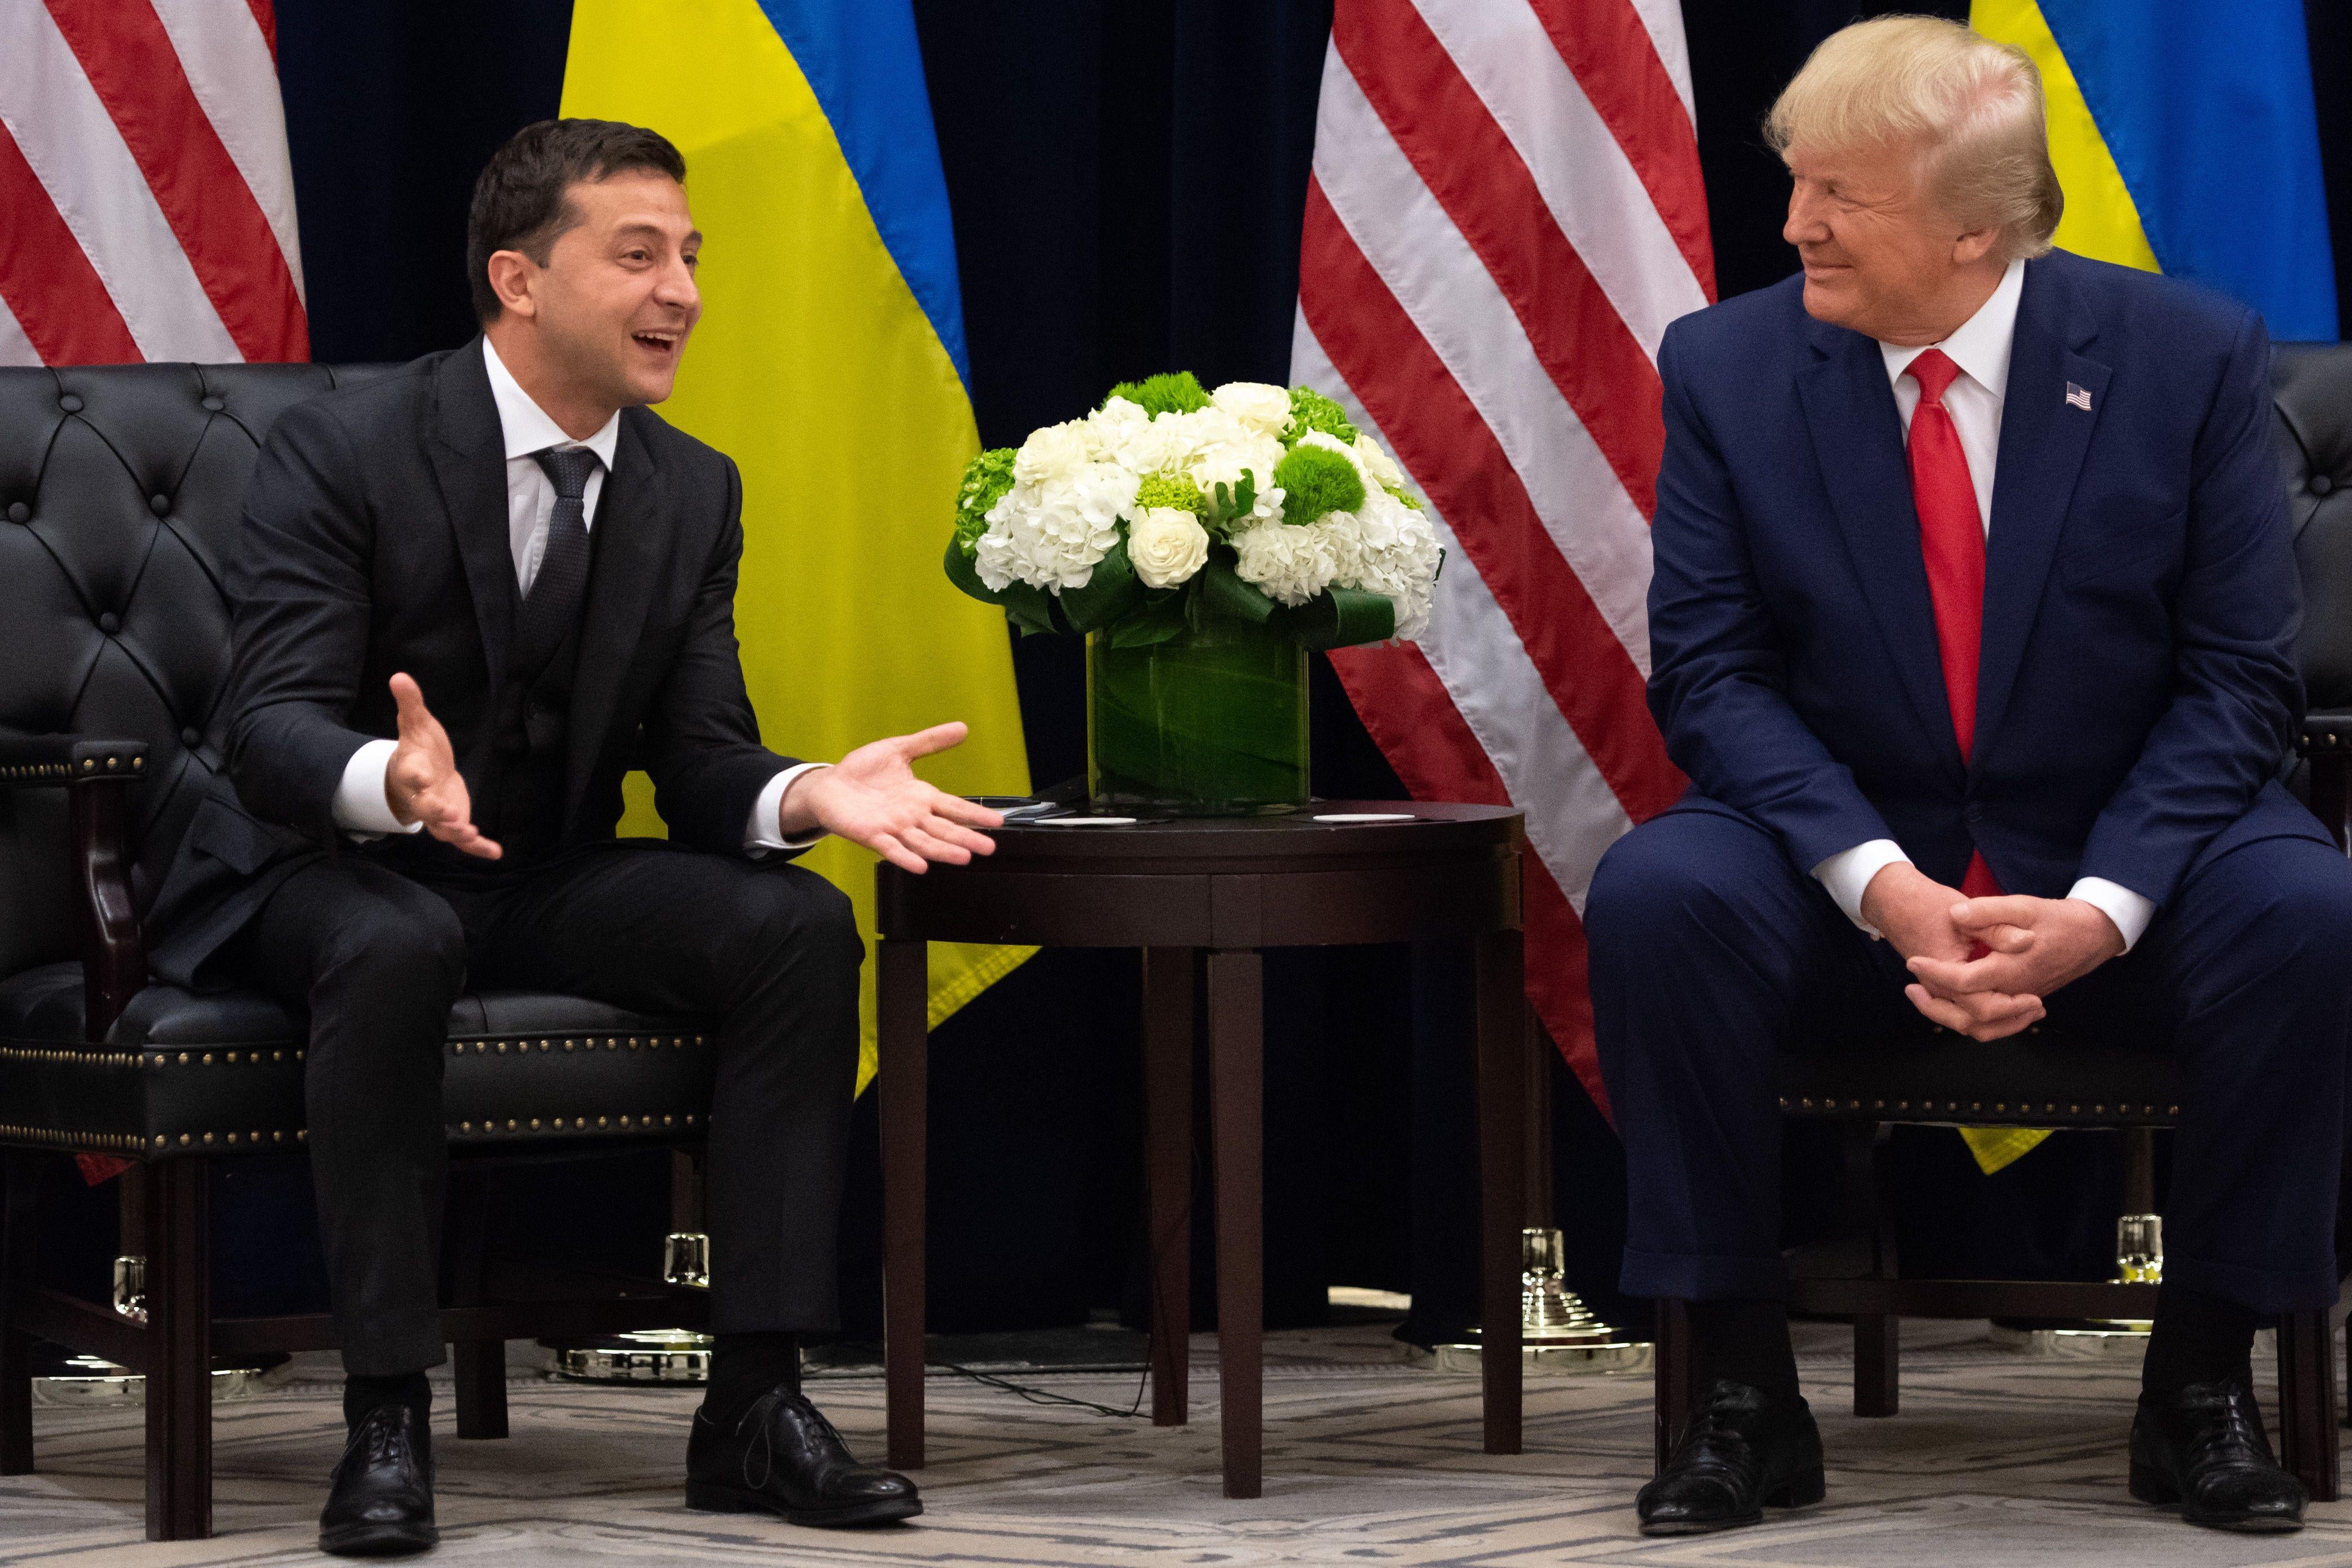 Ukrainian President Volodymyr Zelensky and President Donald Trump in New York on Wednesday.